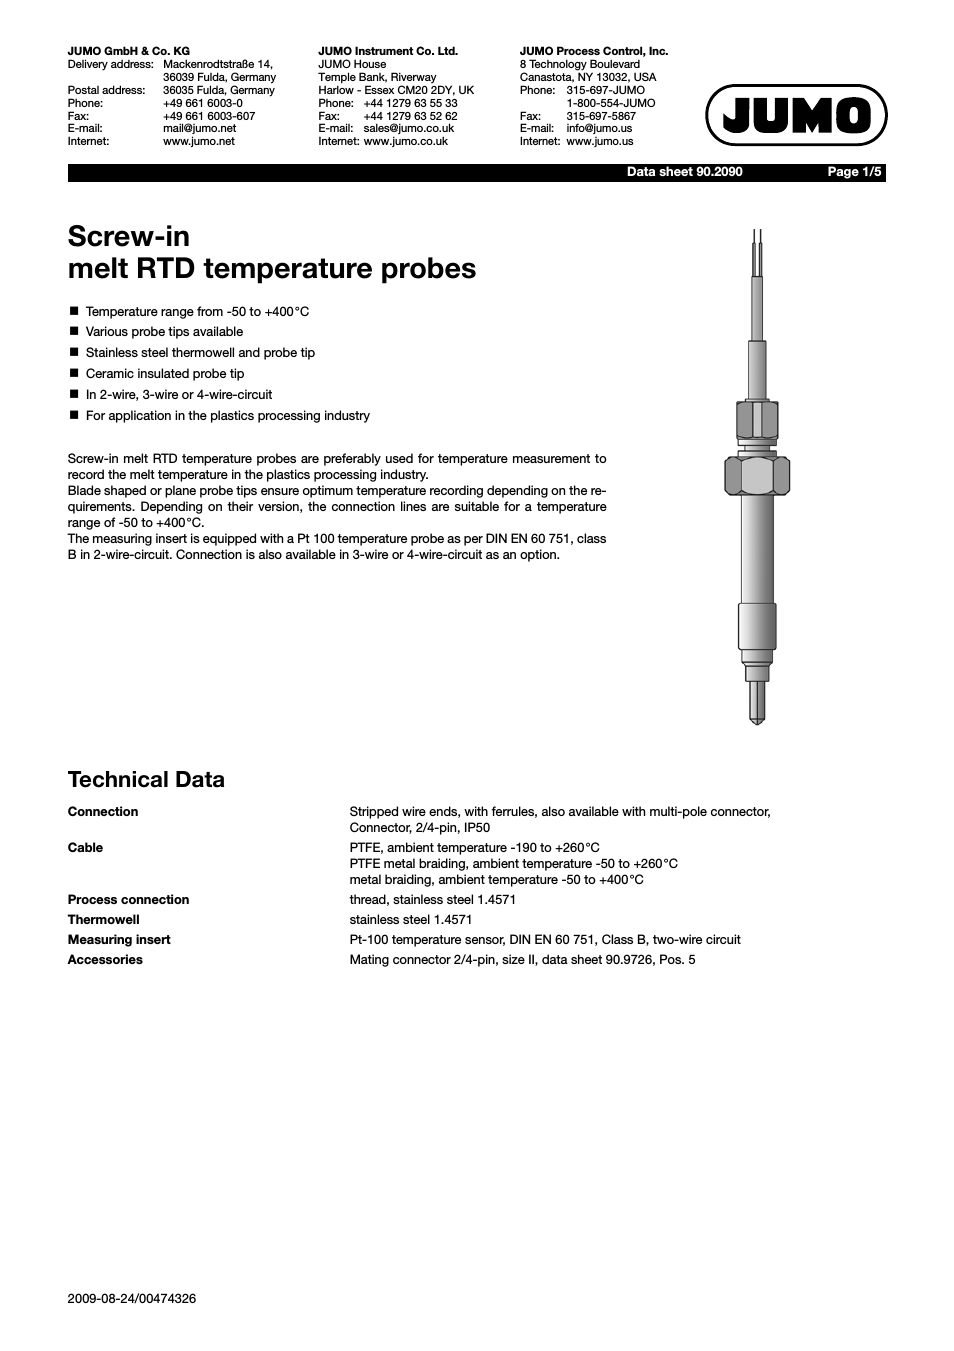 902090 Screw-In Melt RTD Temperature Probe Data Sheet